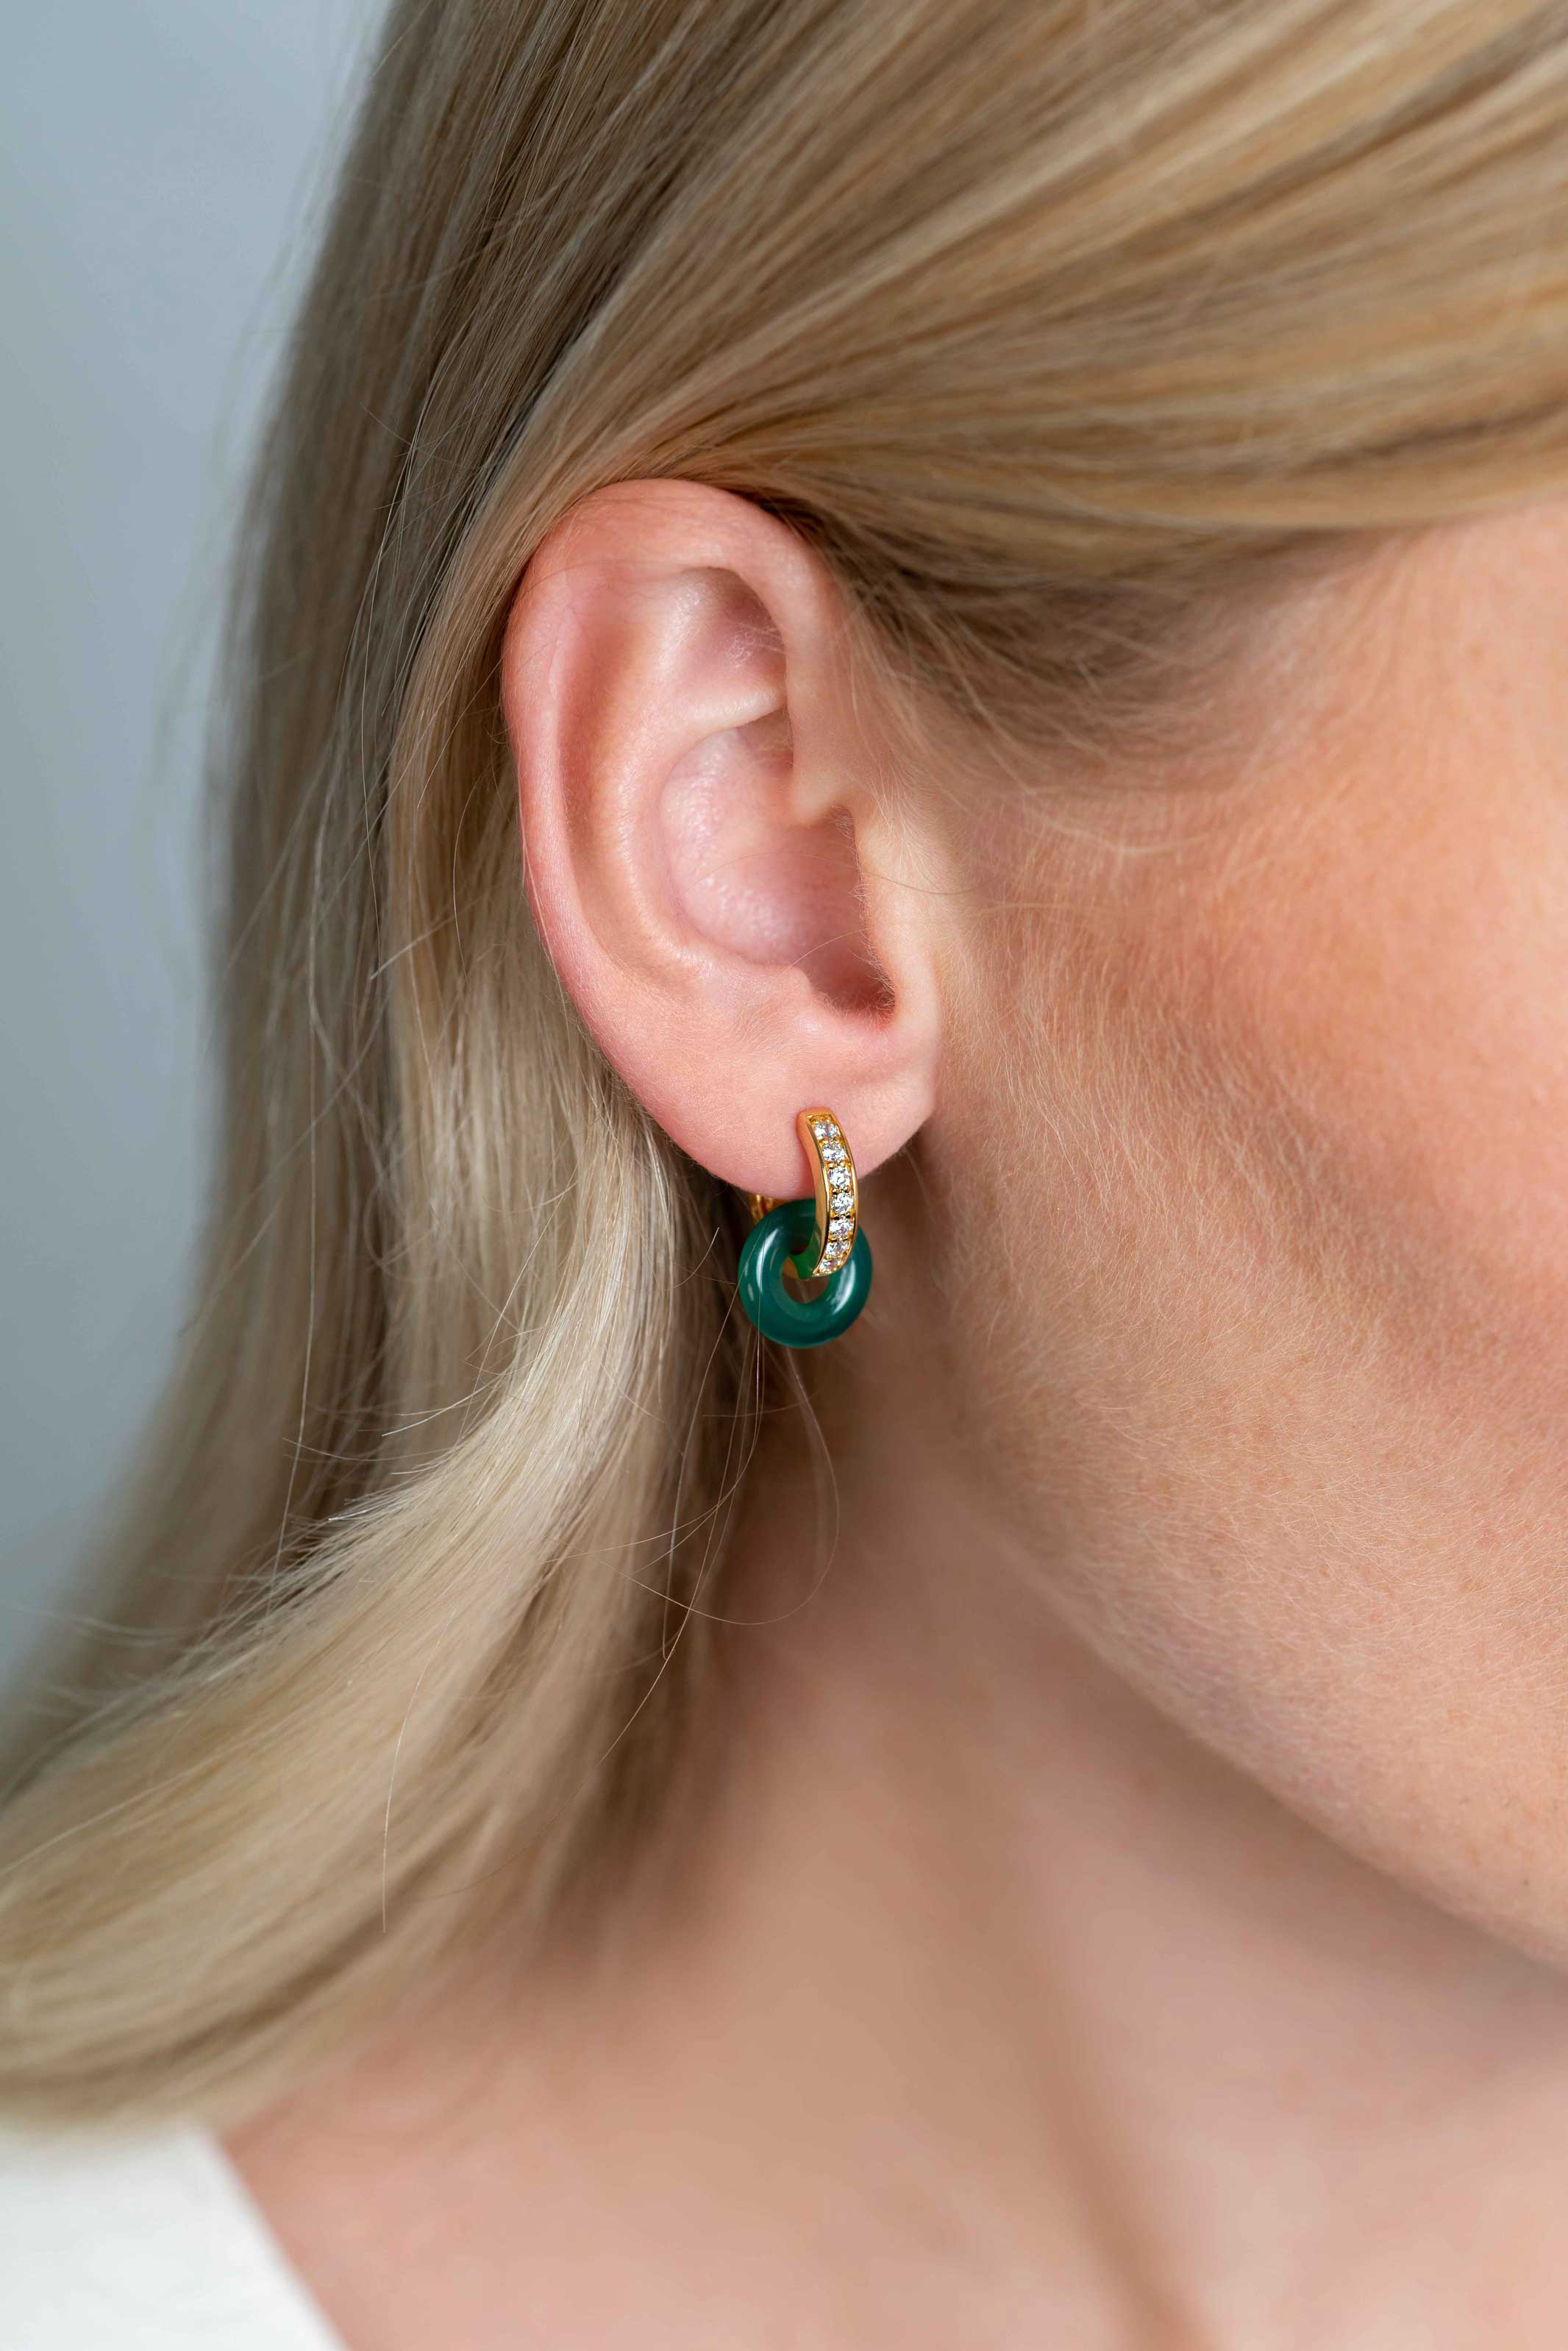 12mm ZINZI Earrings Pendants Round in Green Agate ZICH2274G (excl. hoop earrings)